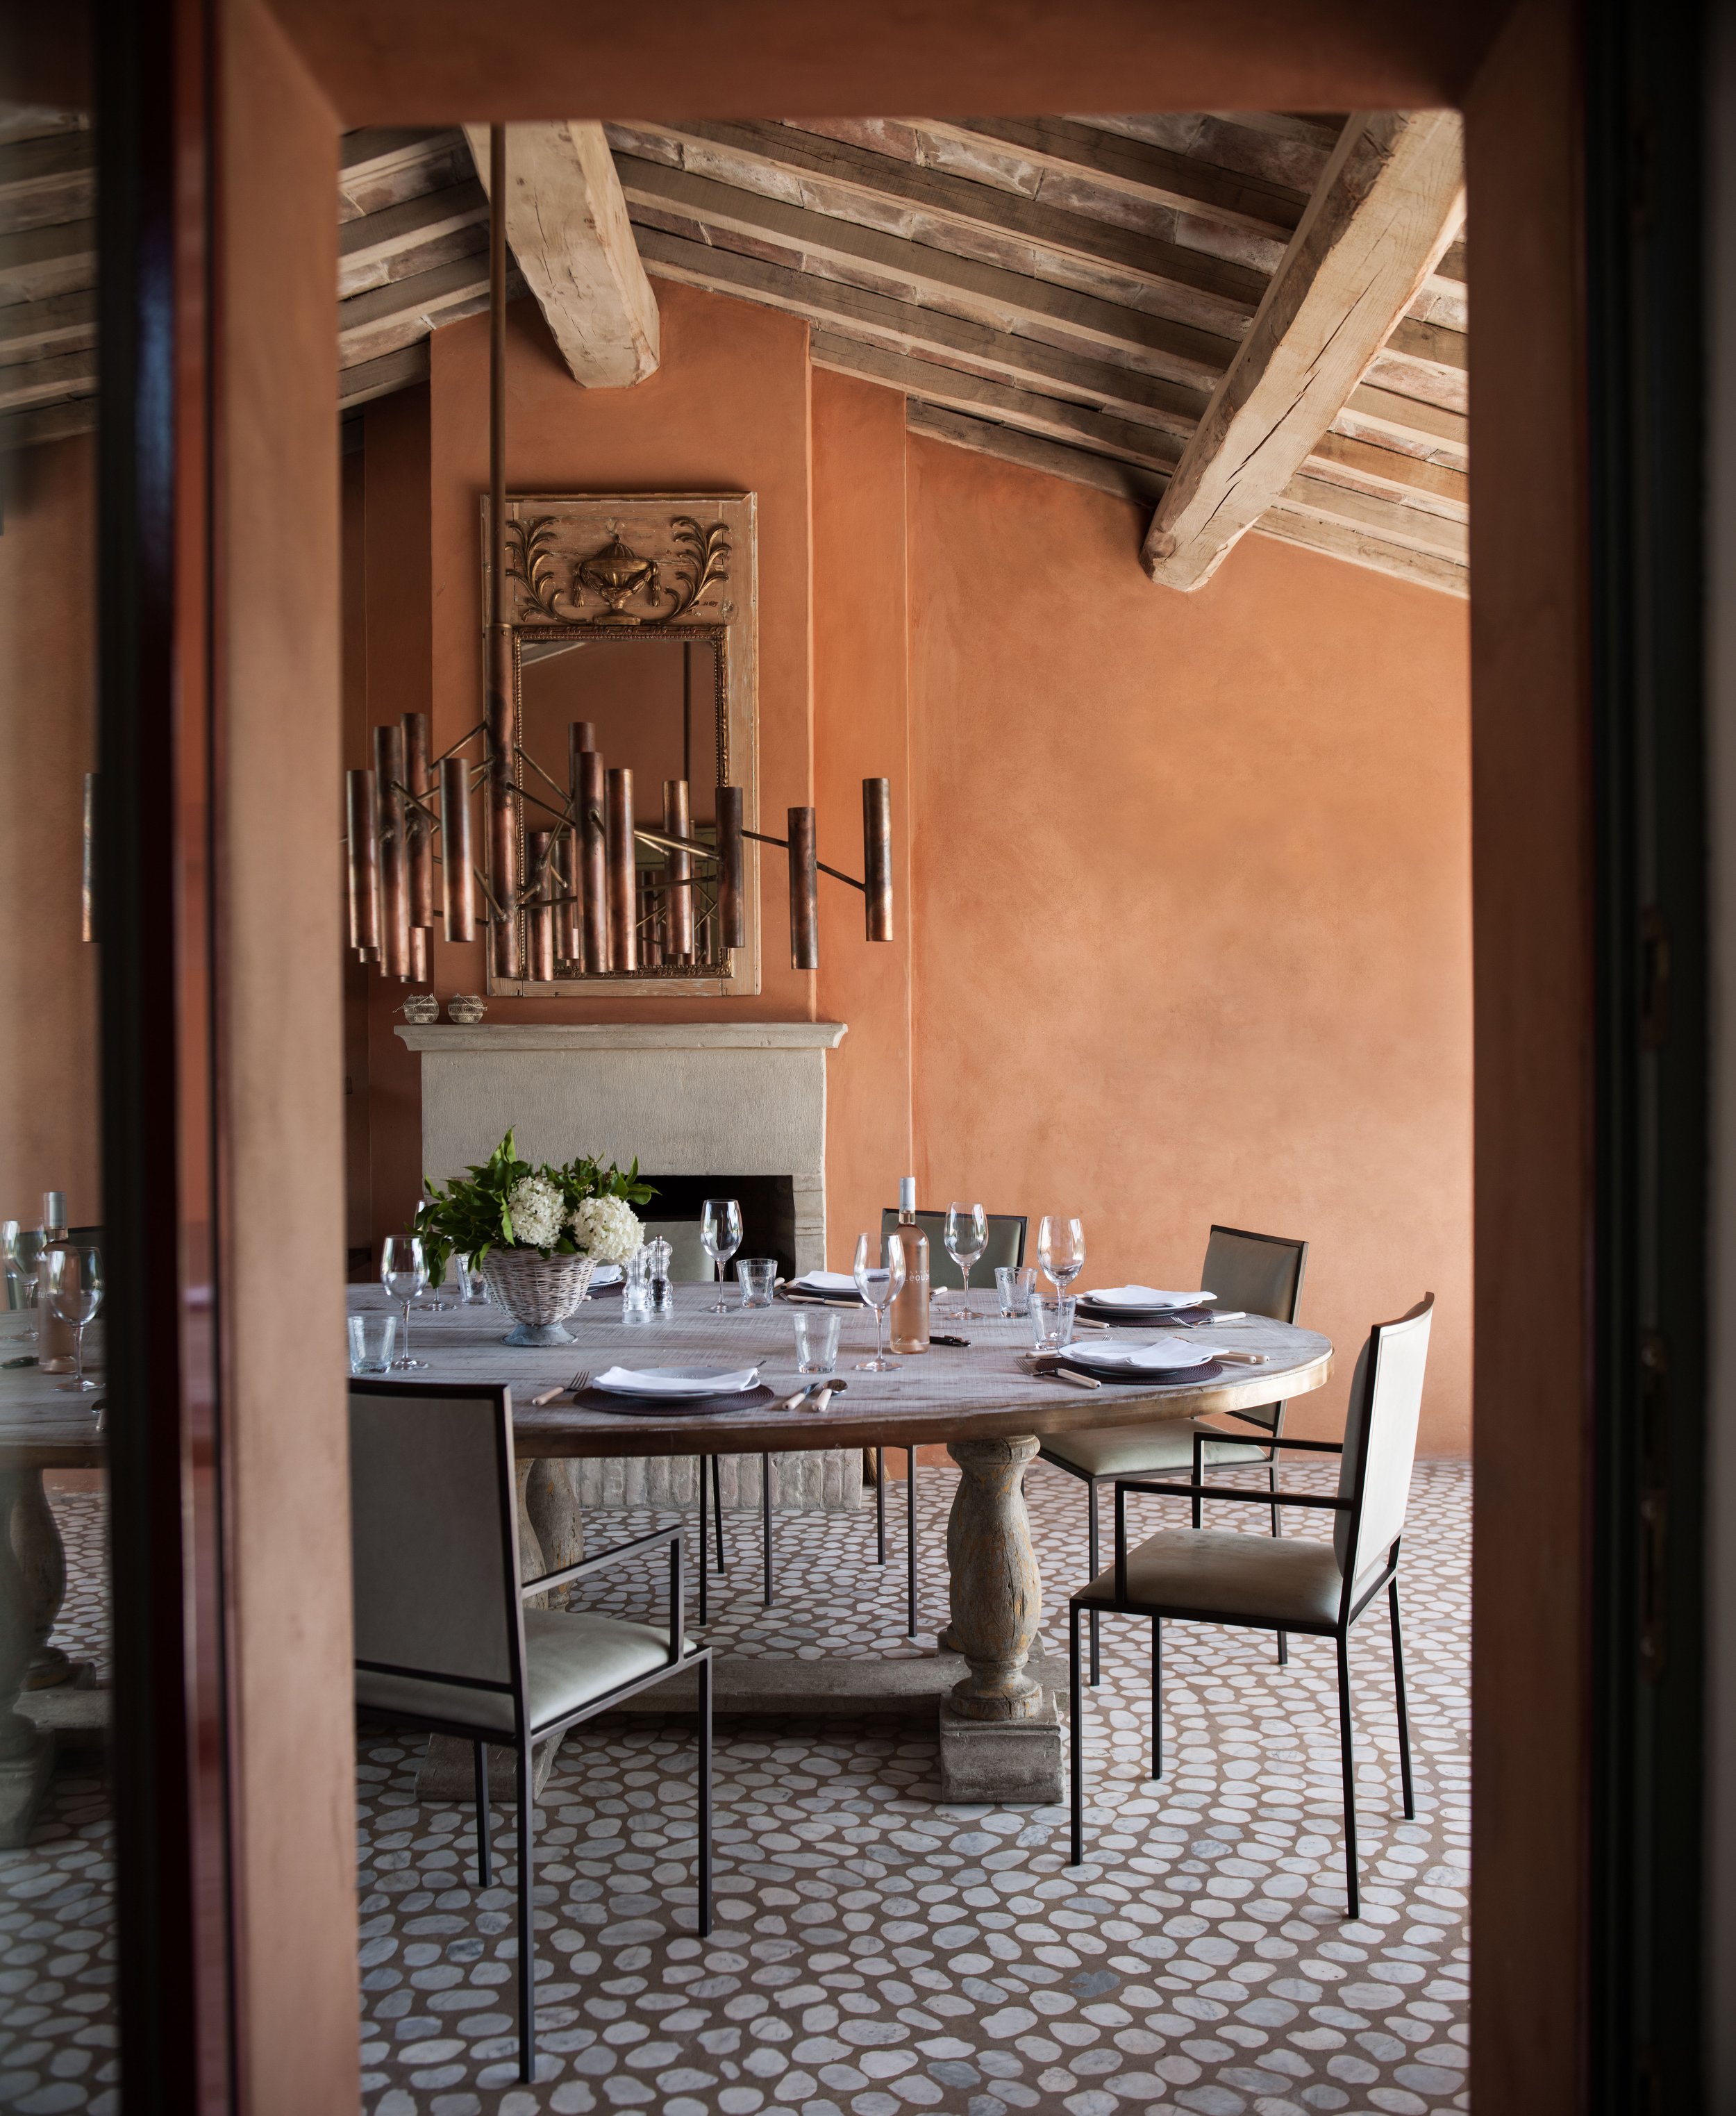 Francis York Exclusive Luxury Villa Rental in Umbria, Italy 7.jpg